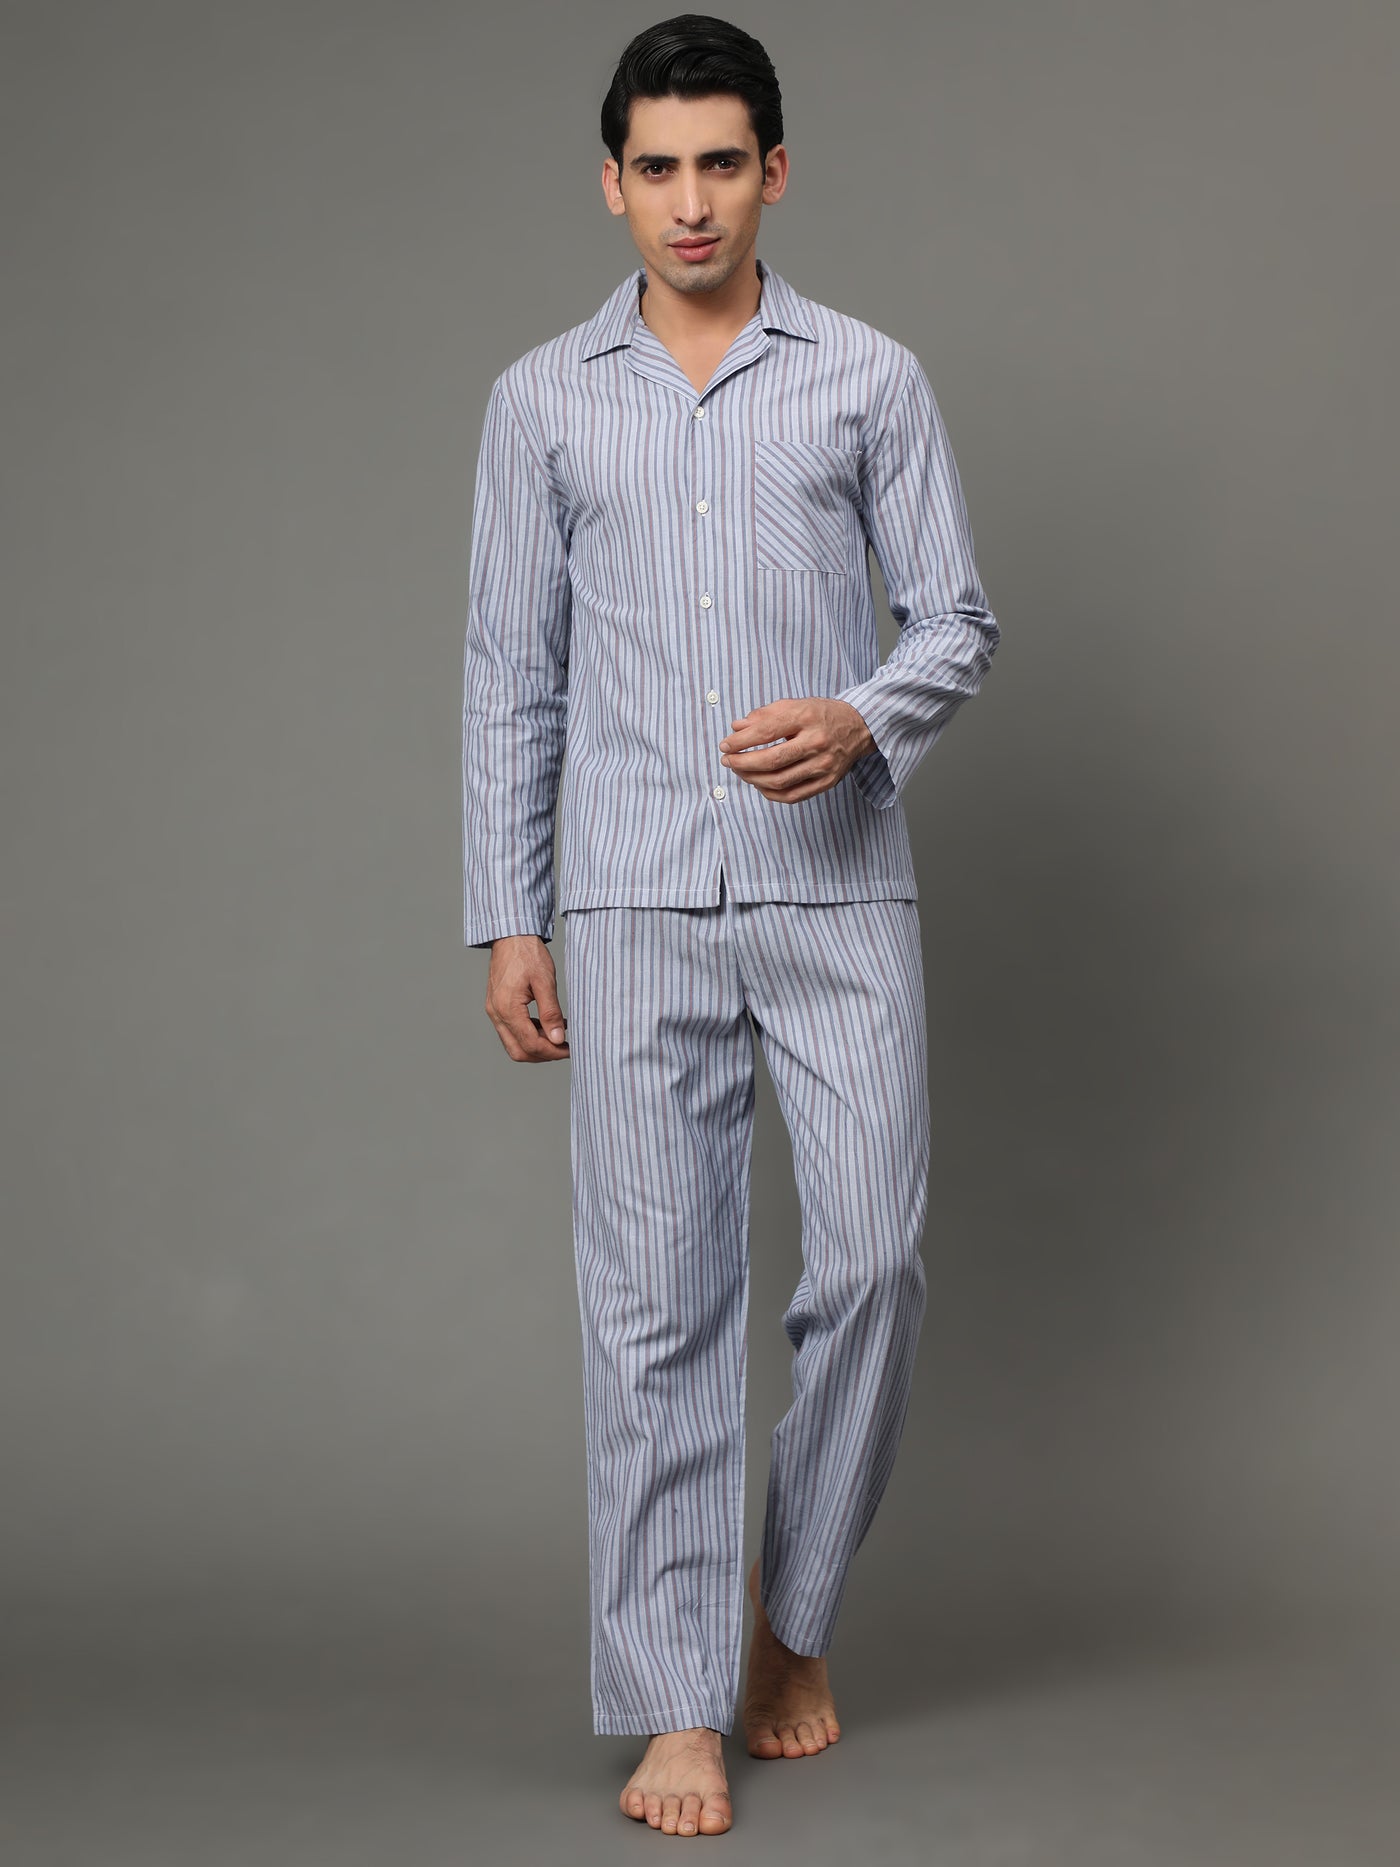 Pyjama Set for Men-Grey Stripes